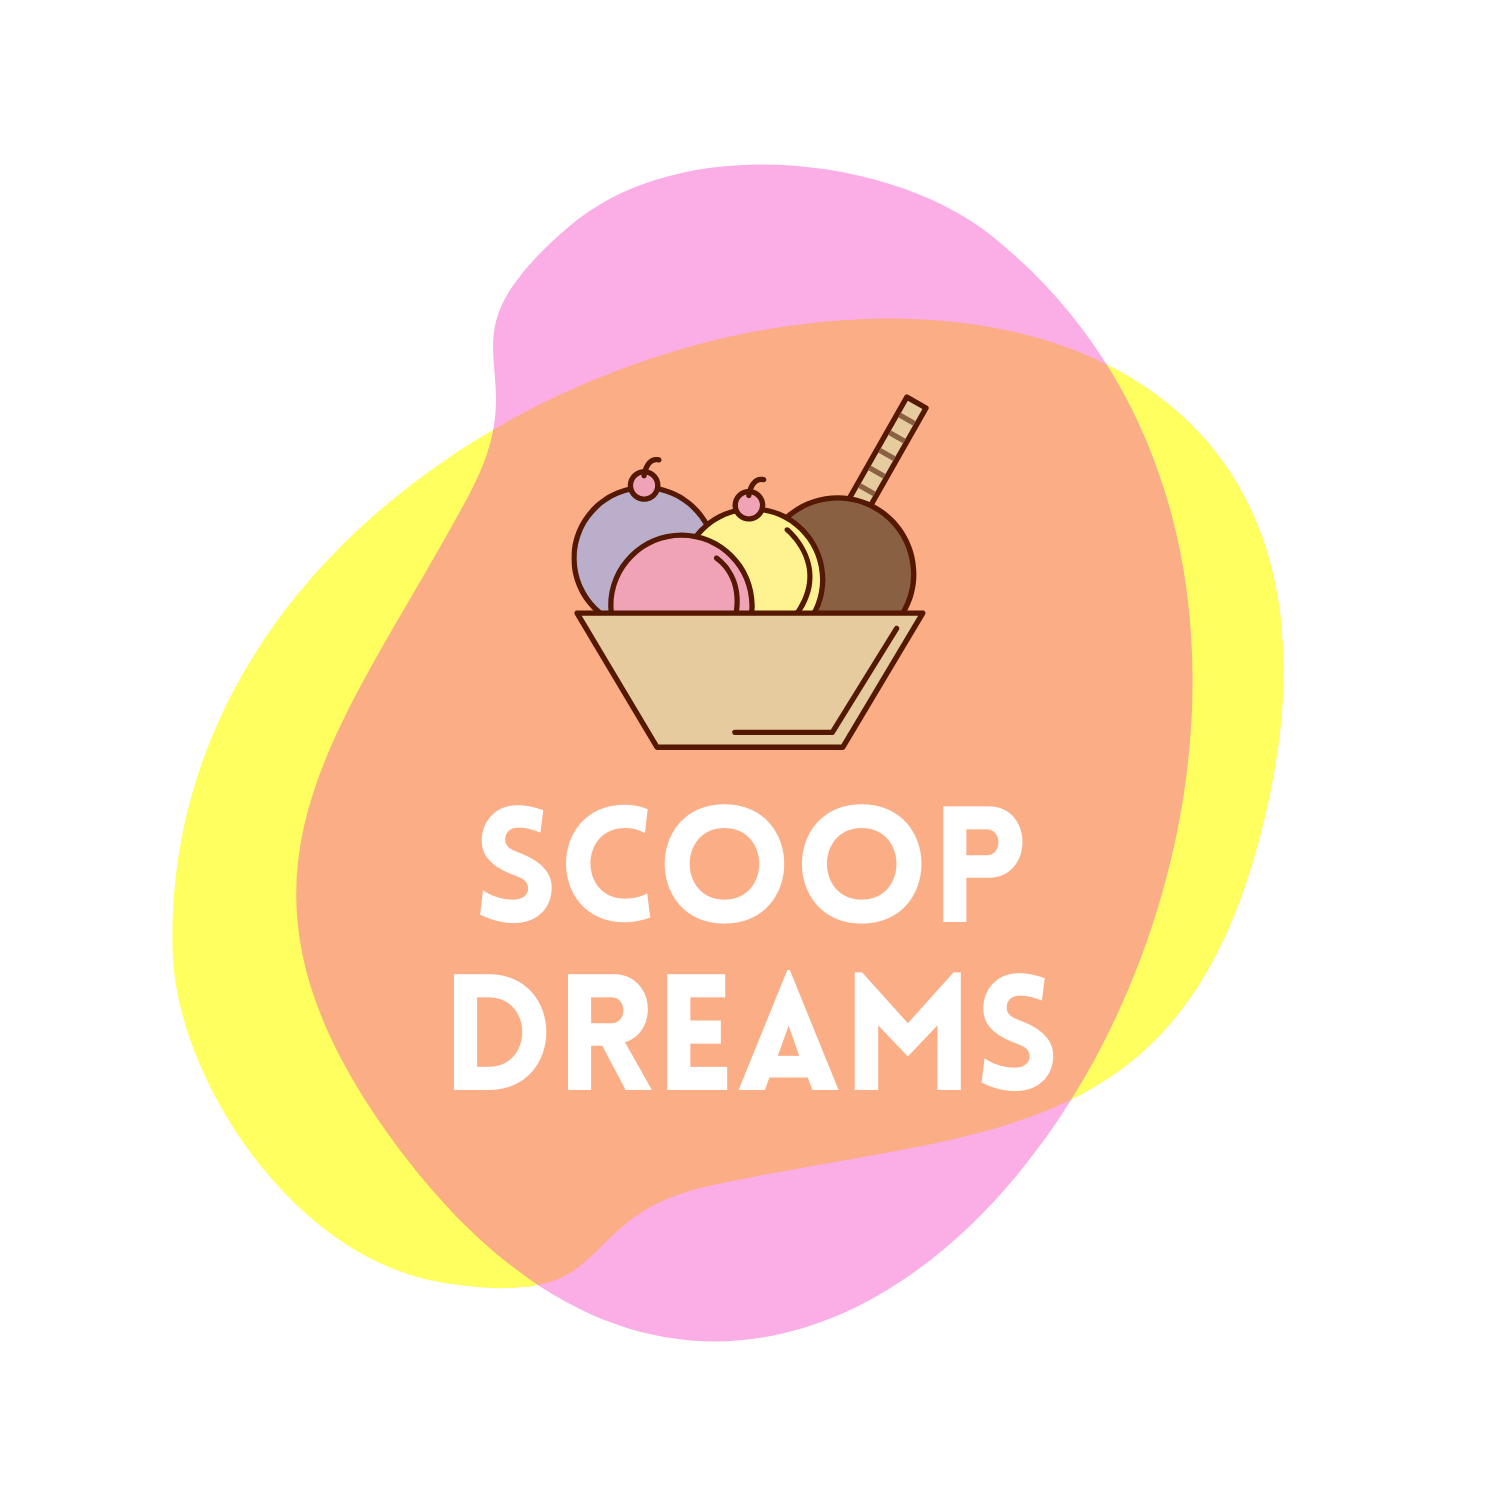 Fox Run Ice Cream / Cookie Dough Scoop 5382